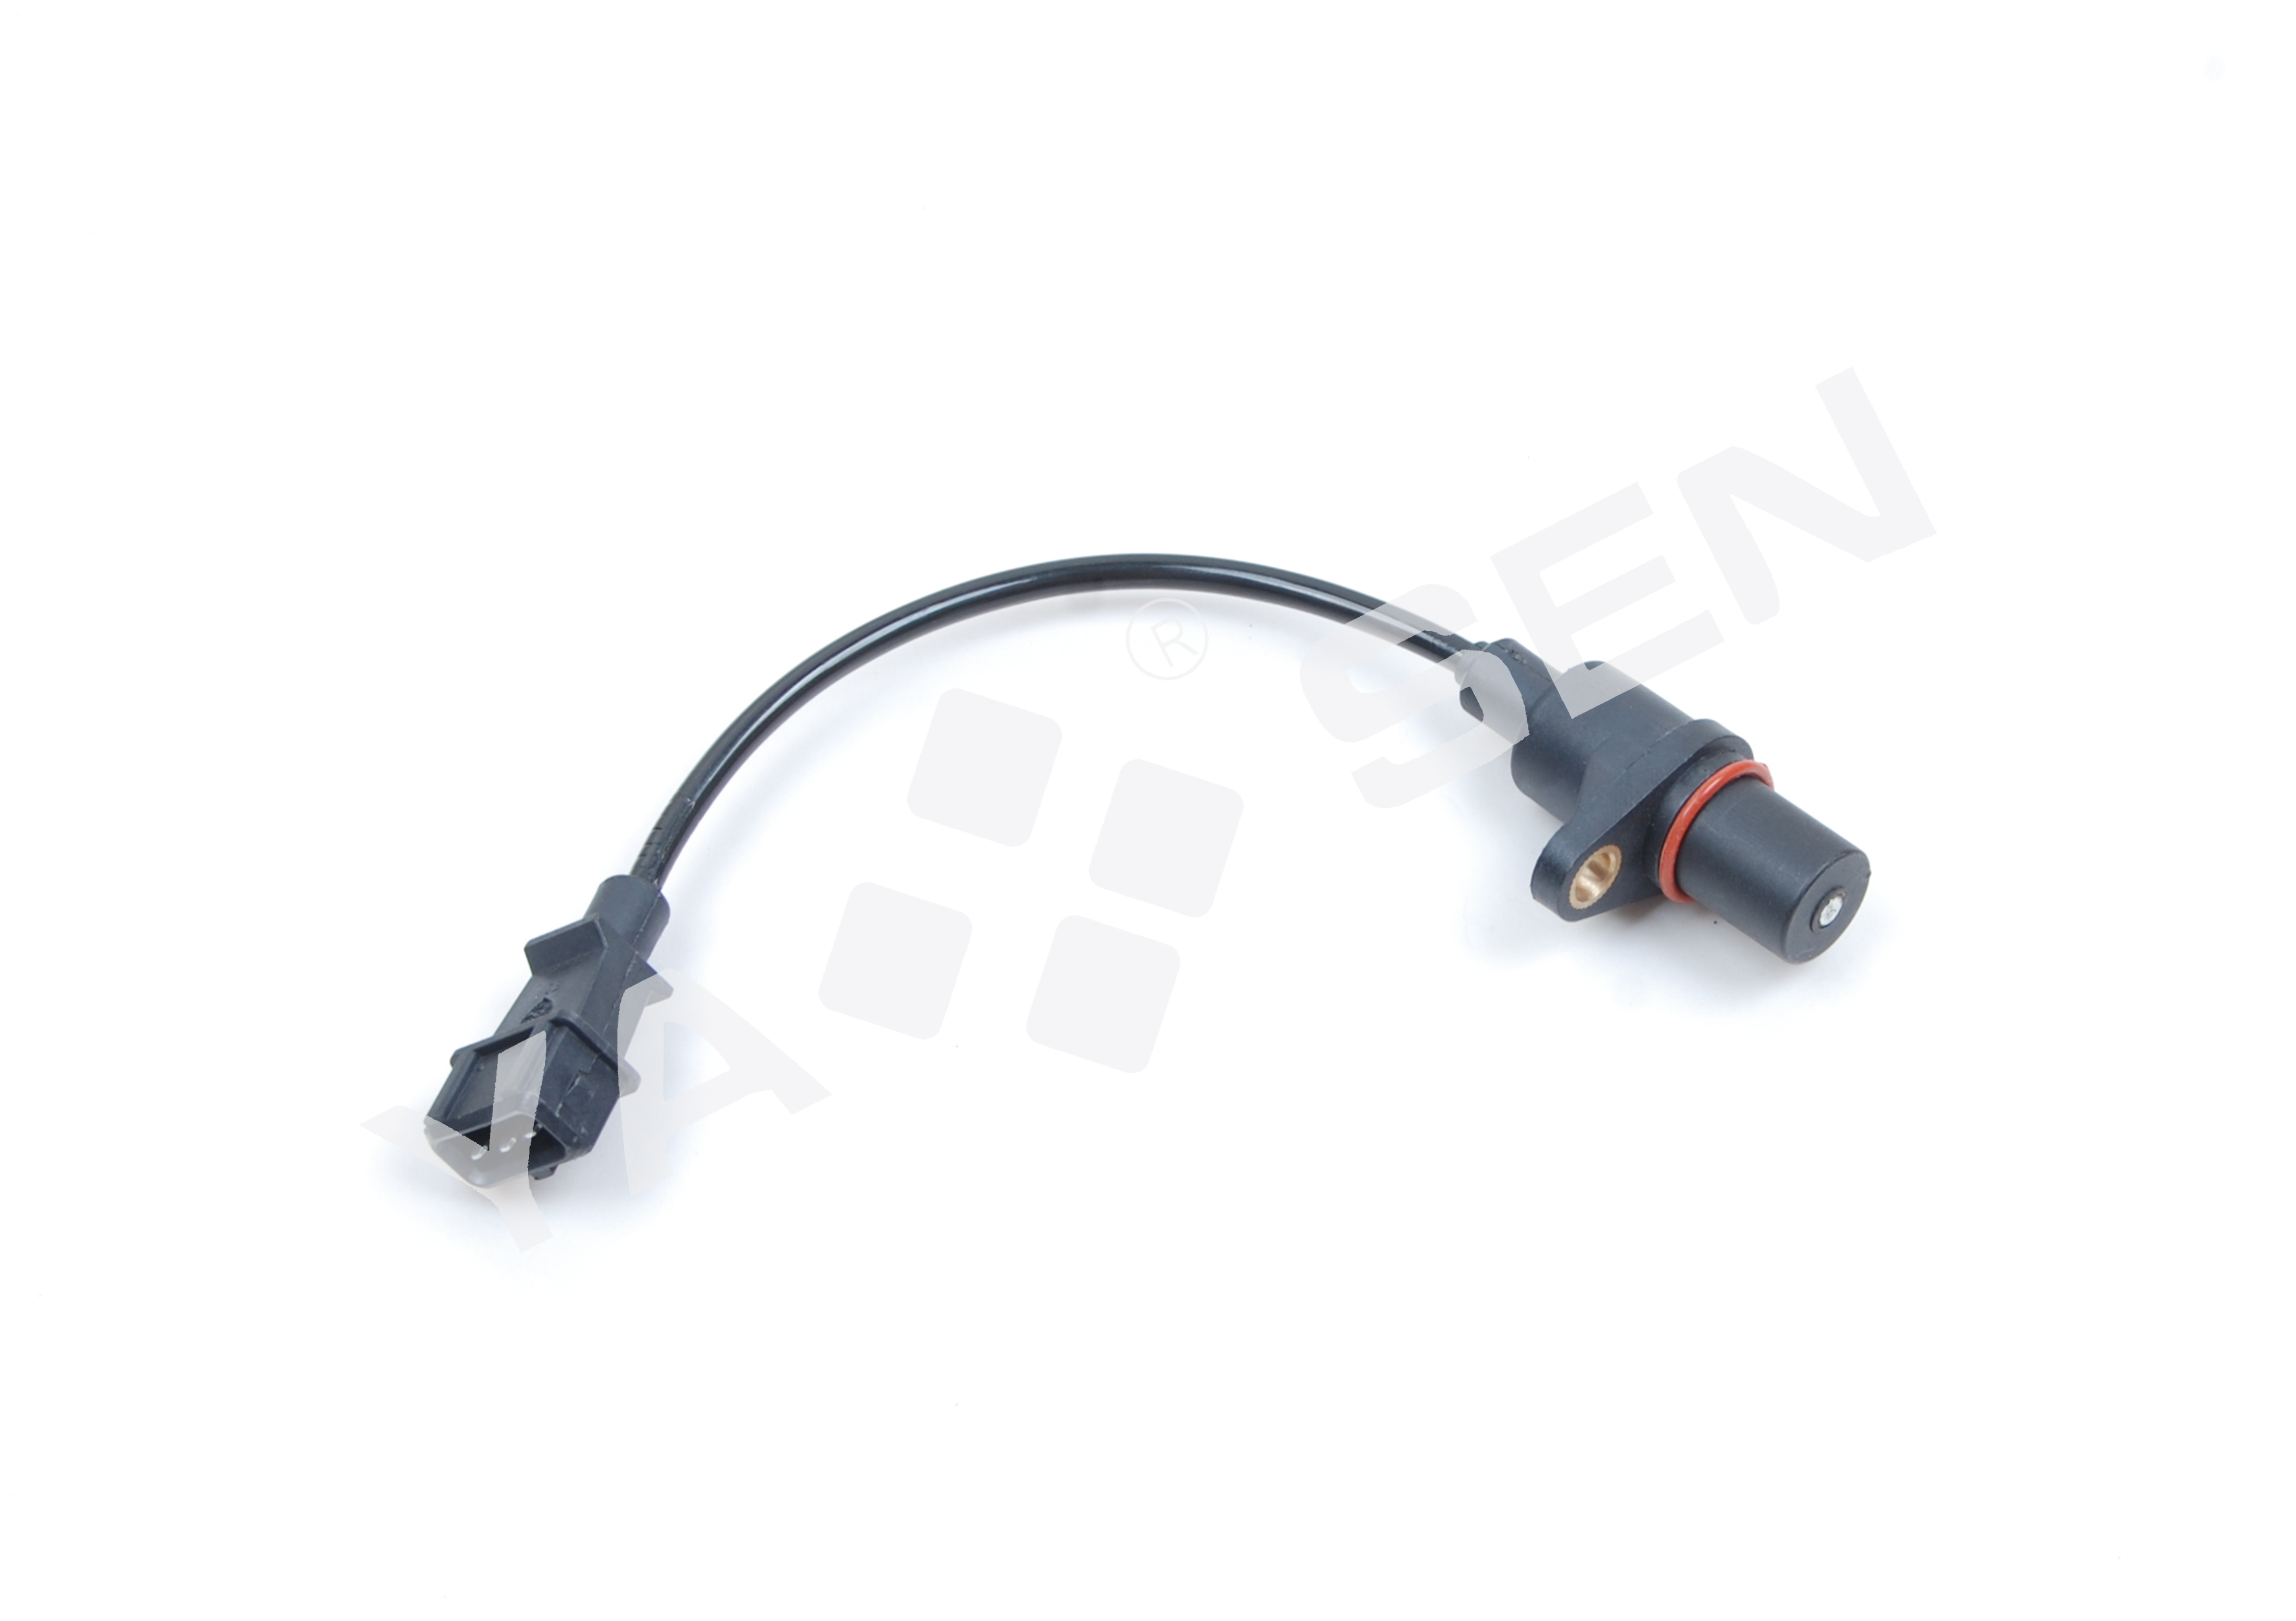 Crankshaft Position Sensor for HYUNDAI/KIA, 39180-22040 39180-23000 39180-22050 2CRK0004  S10129 1800330 PC202 SS1015